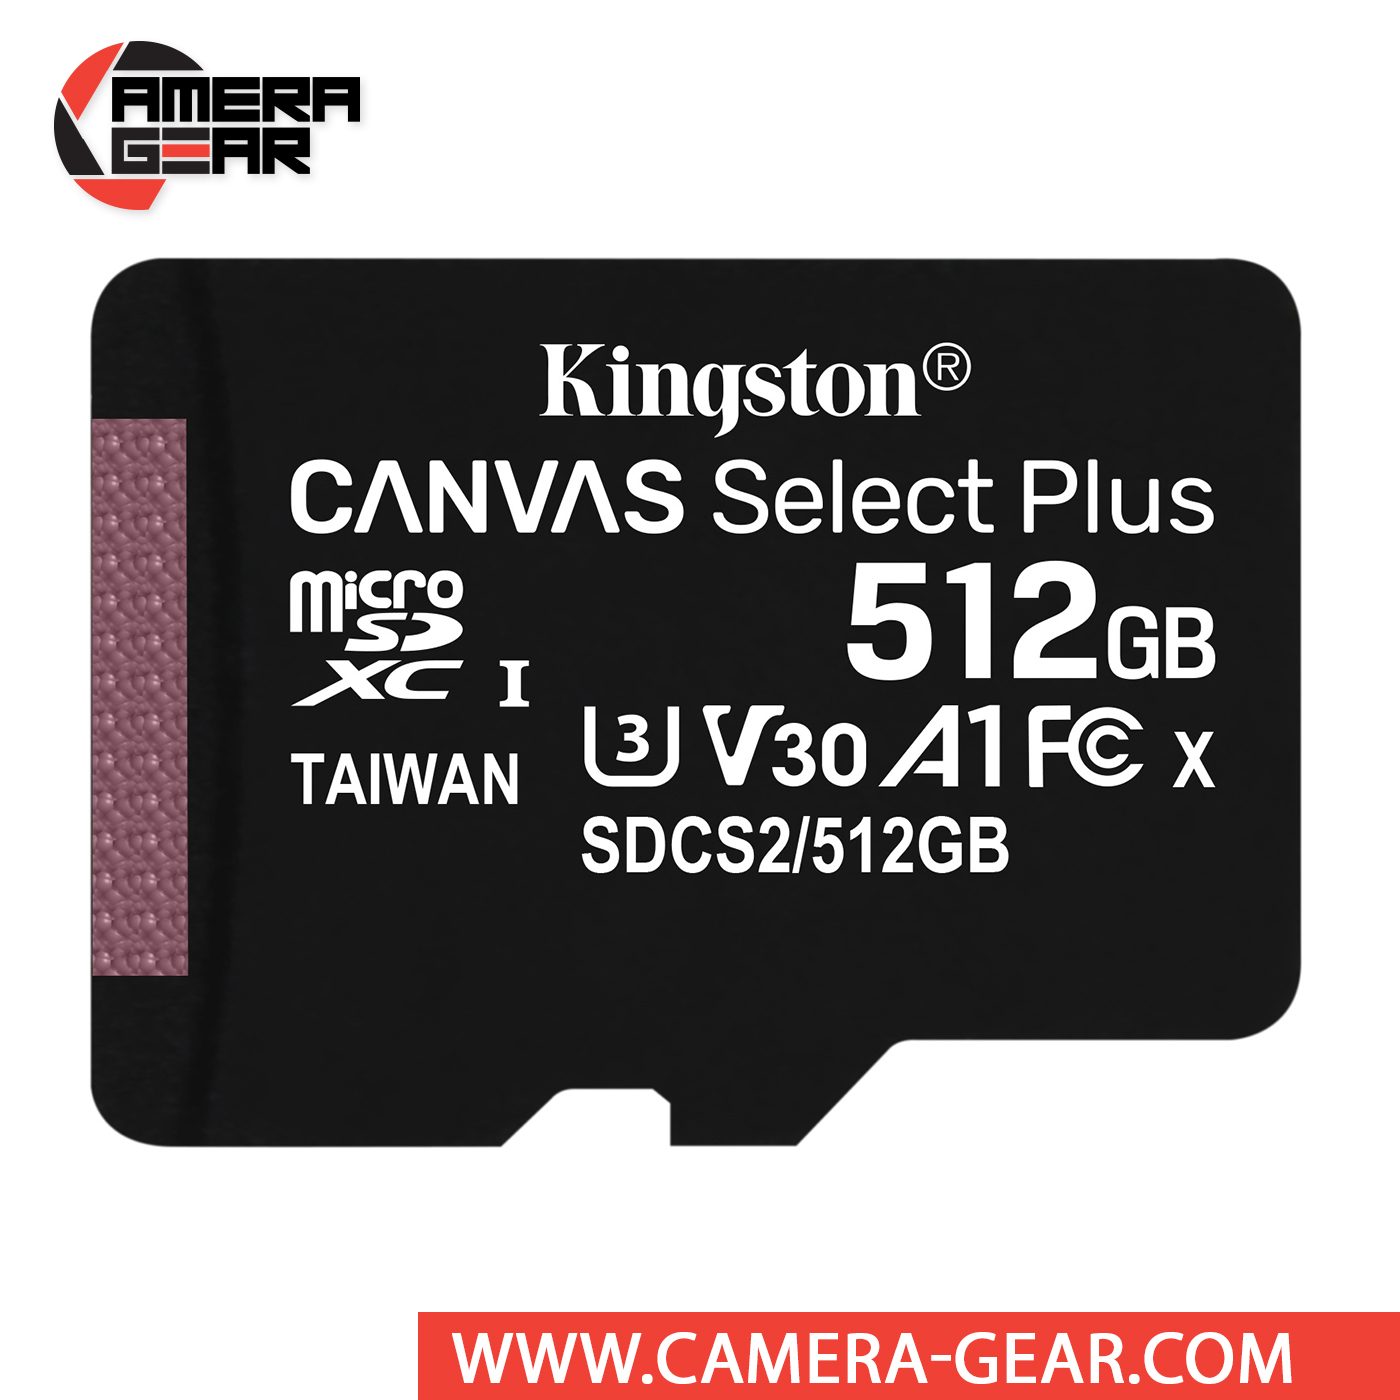 100MBs Works with Kingston Kingston 512GB Karbonn Alfa A92 Plus MicroSDXC Canvas Select Plus Card Verified by SanFlash. 